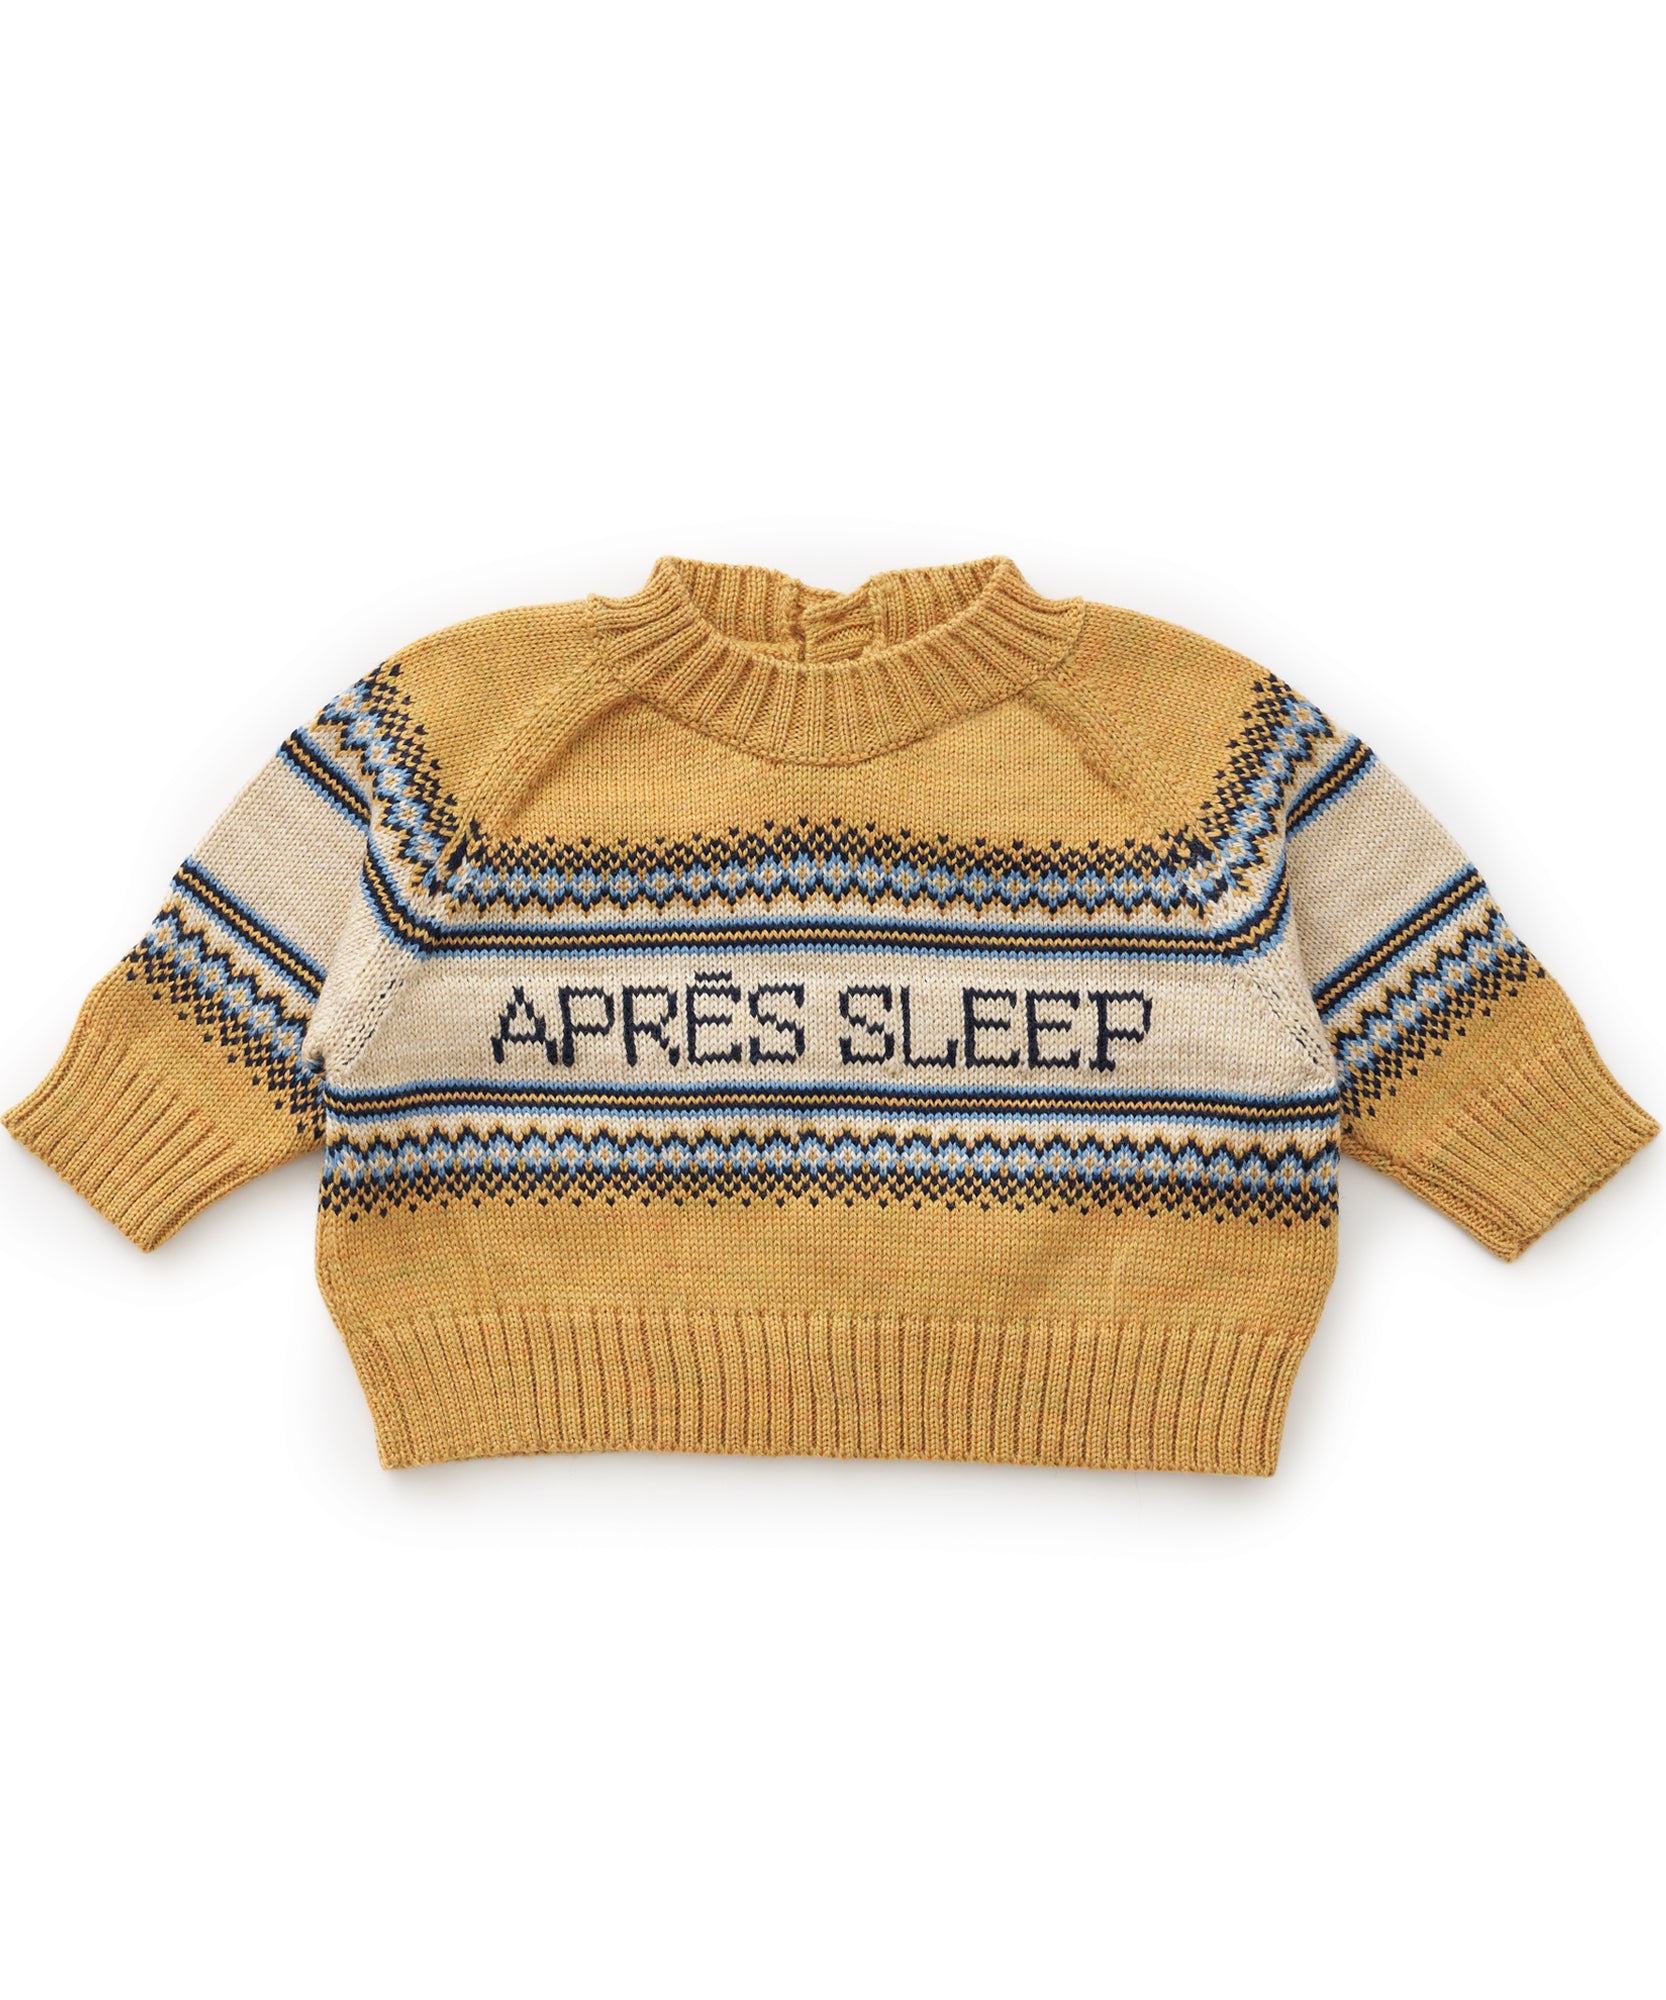 Oeuf Apres Sleep Sweater - Sunflower